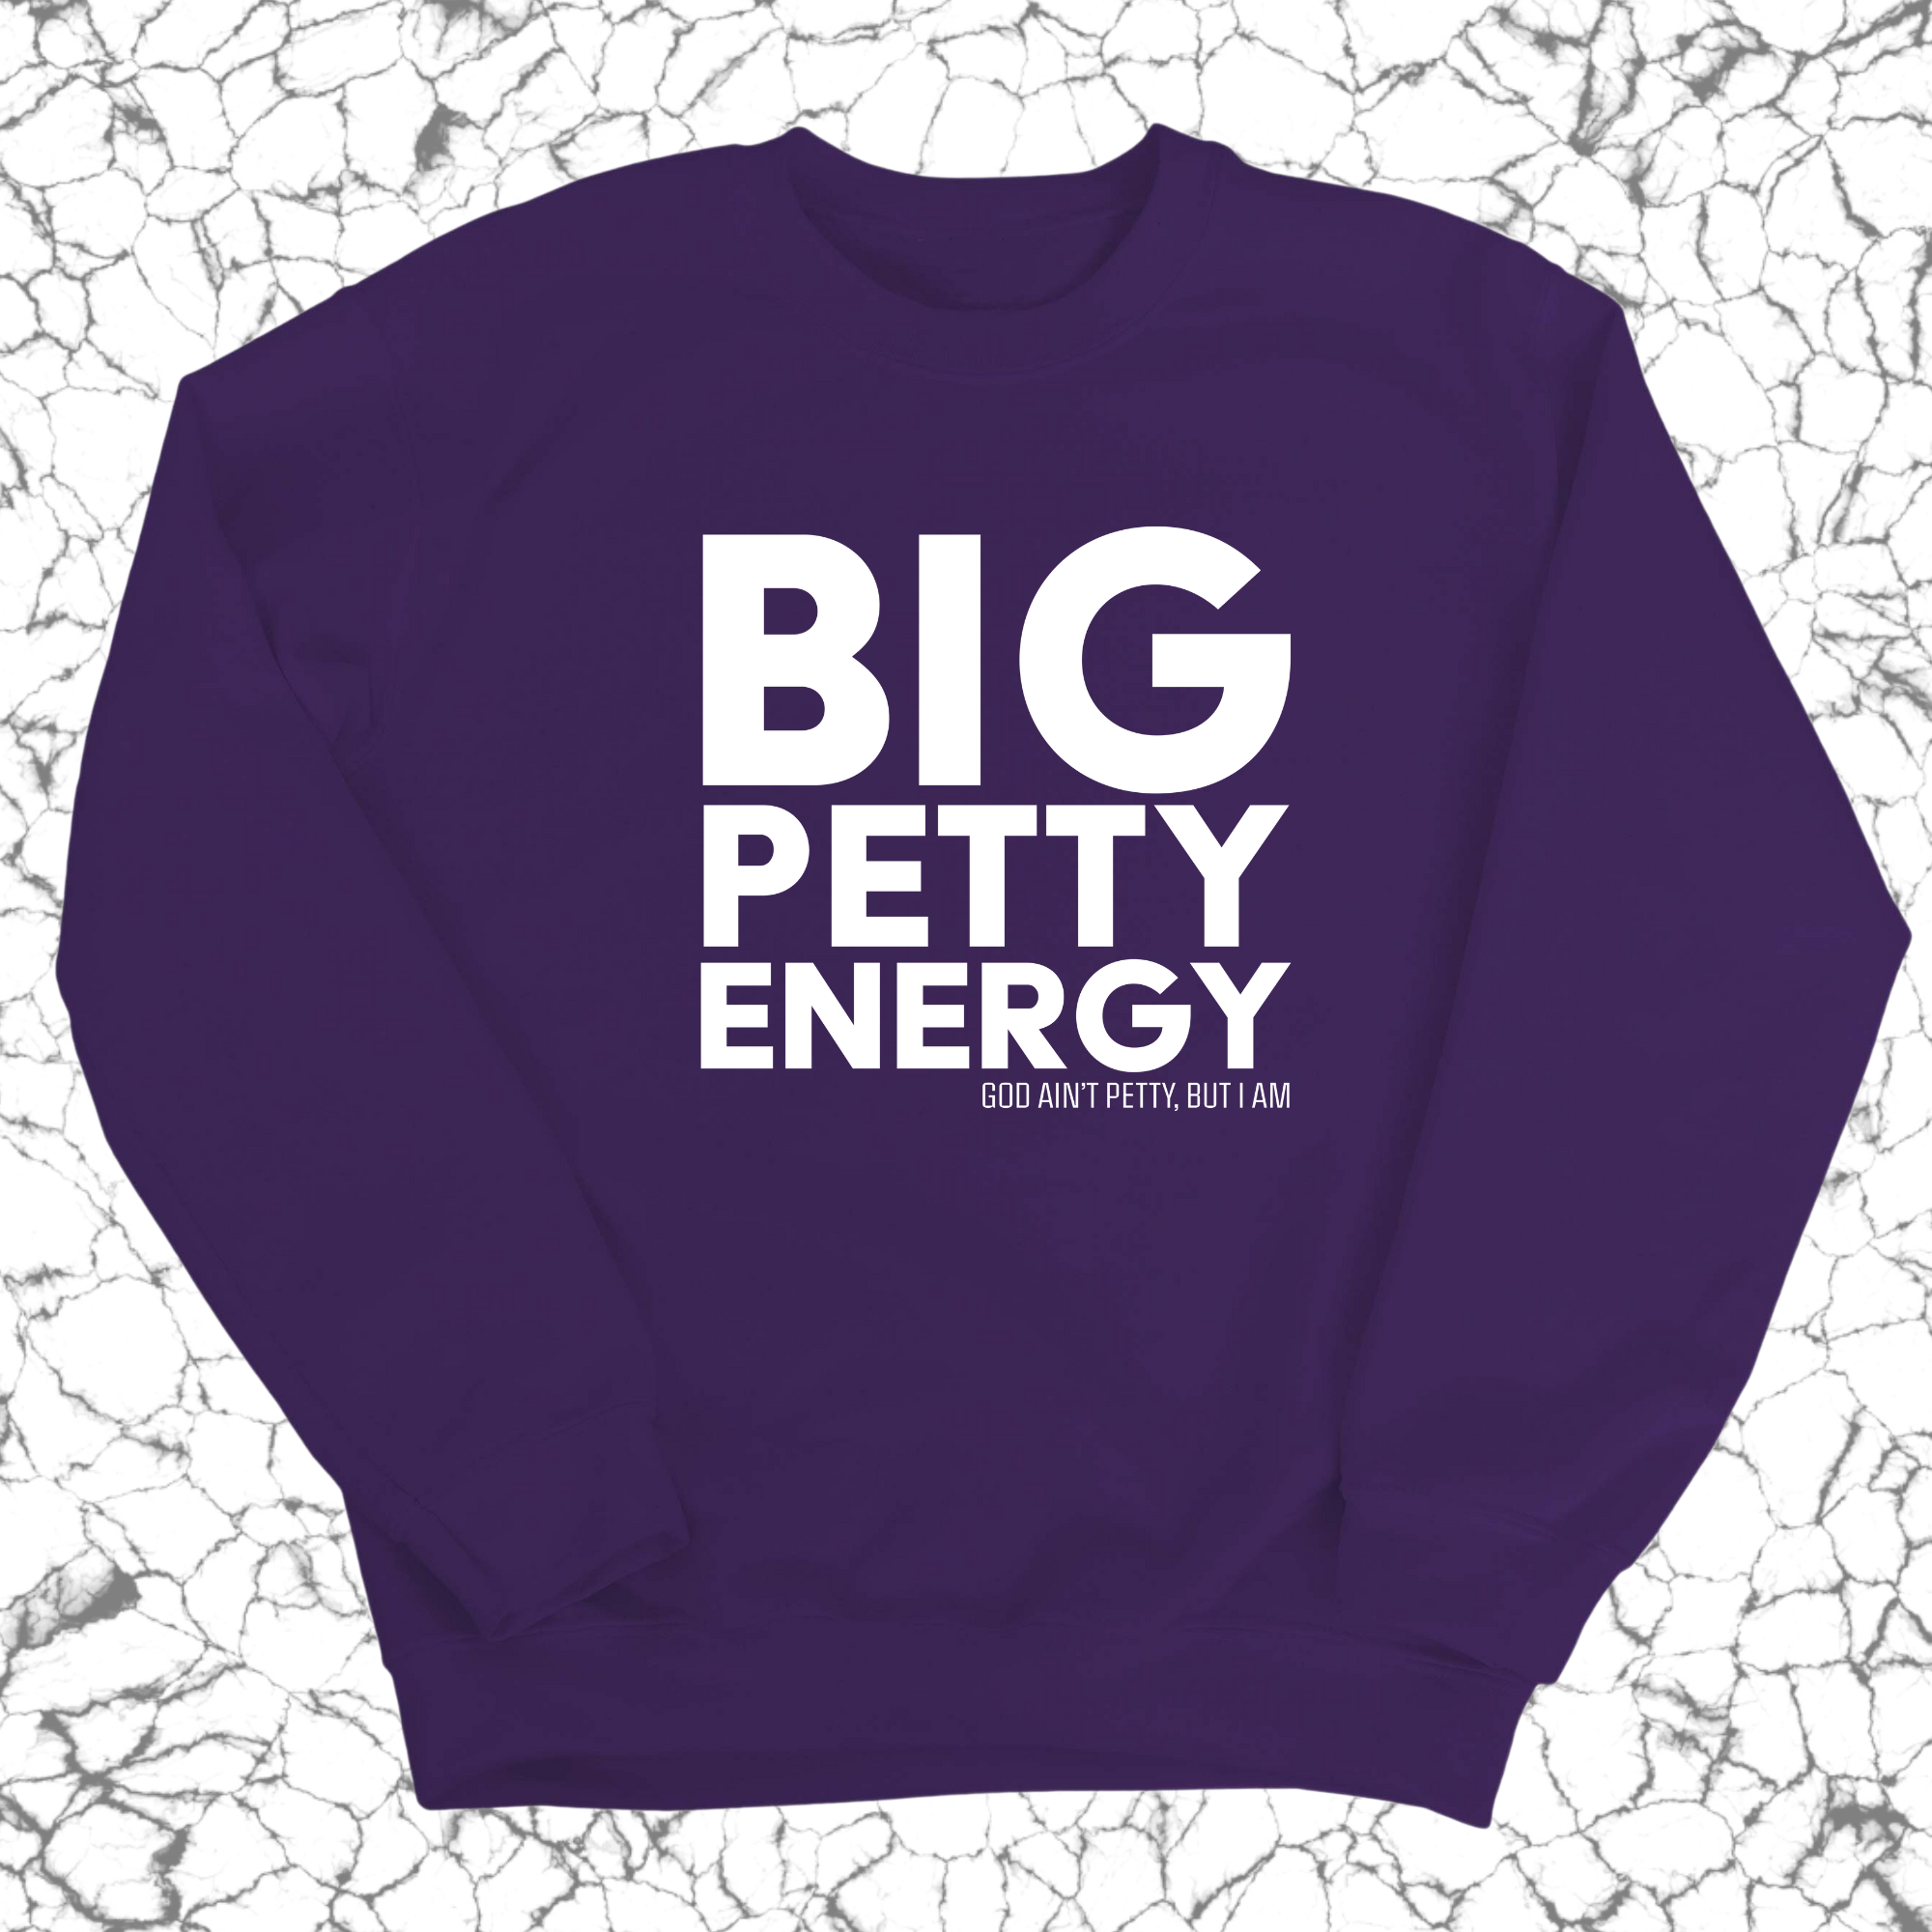 Big Petty Energy Unisex Sweatshirt-Sweatshirt-The Original God Ain't Petty But I Am